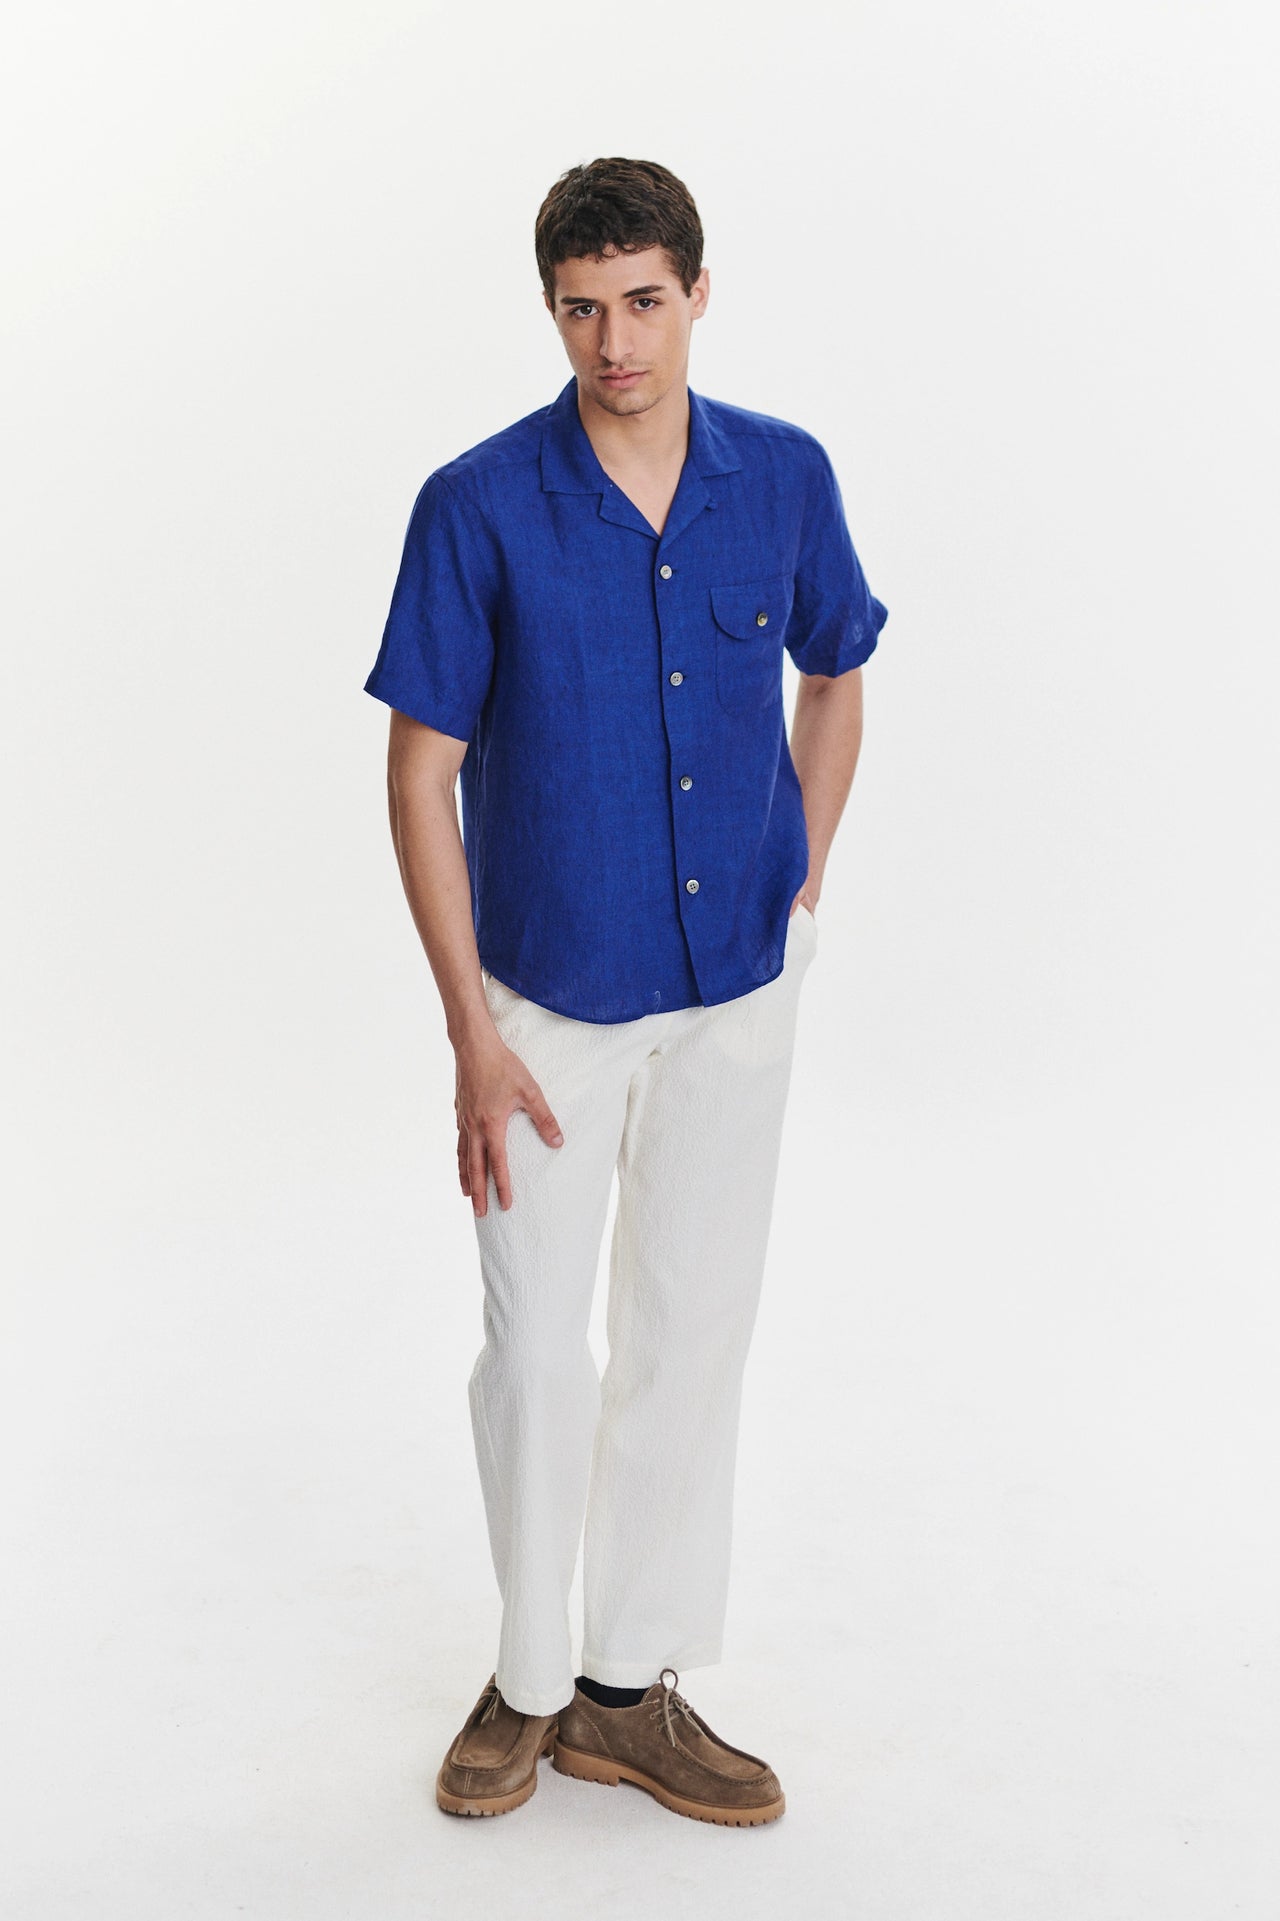 Short Sleeve Camp Collar Shirt in a Soft and Airy Cobalt Blue Bohemian Linen